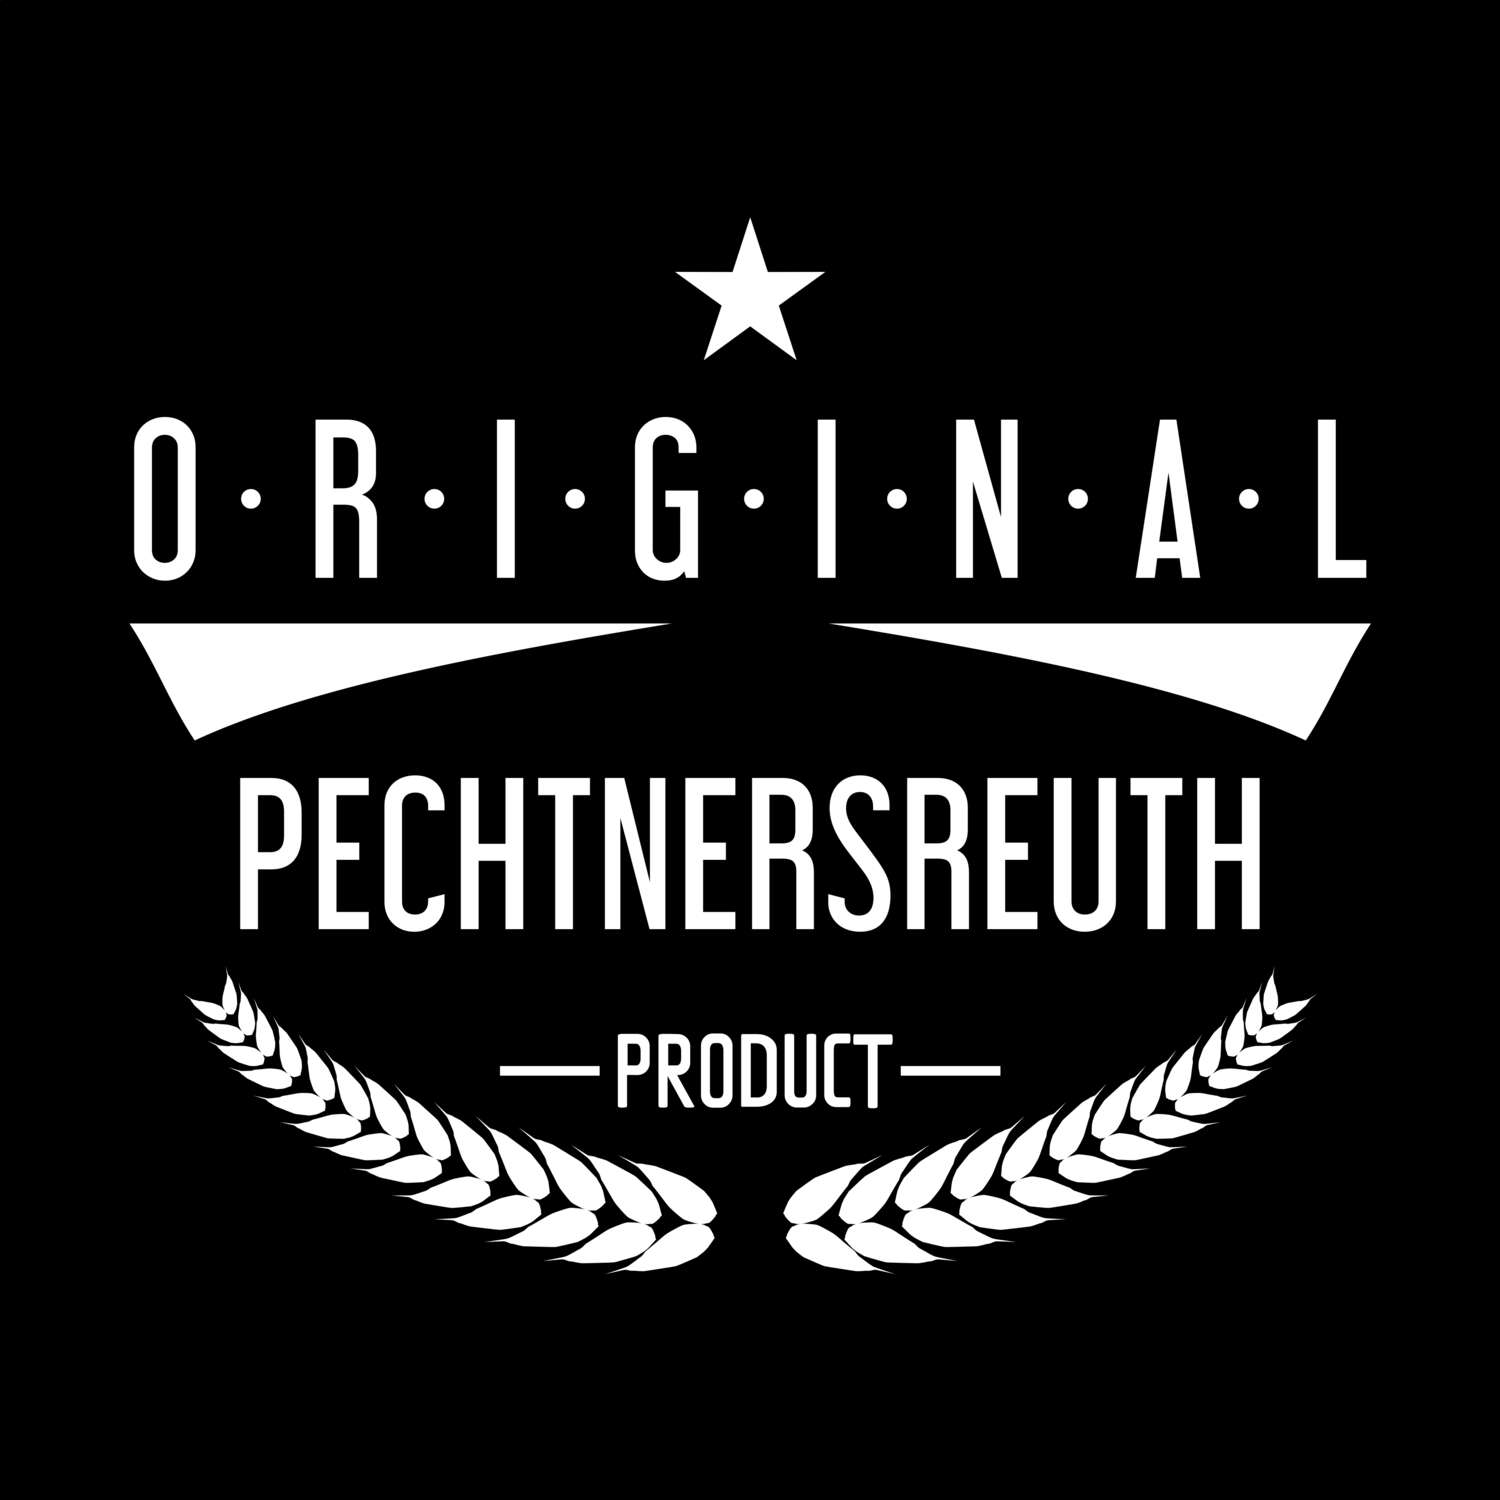 Pechtnersreuth T-Shirt »Original Product«